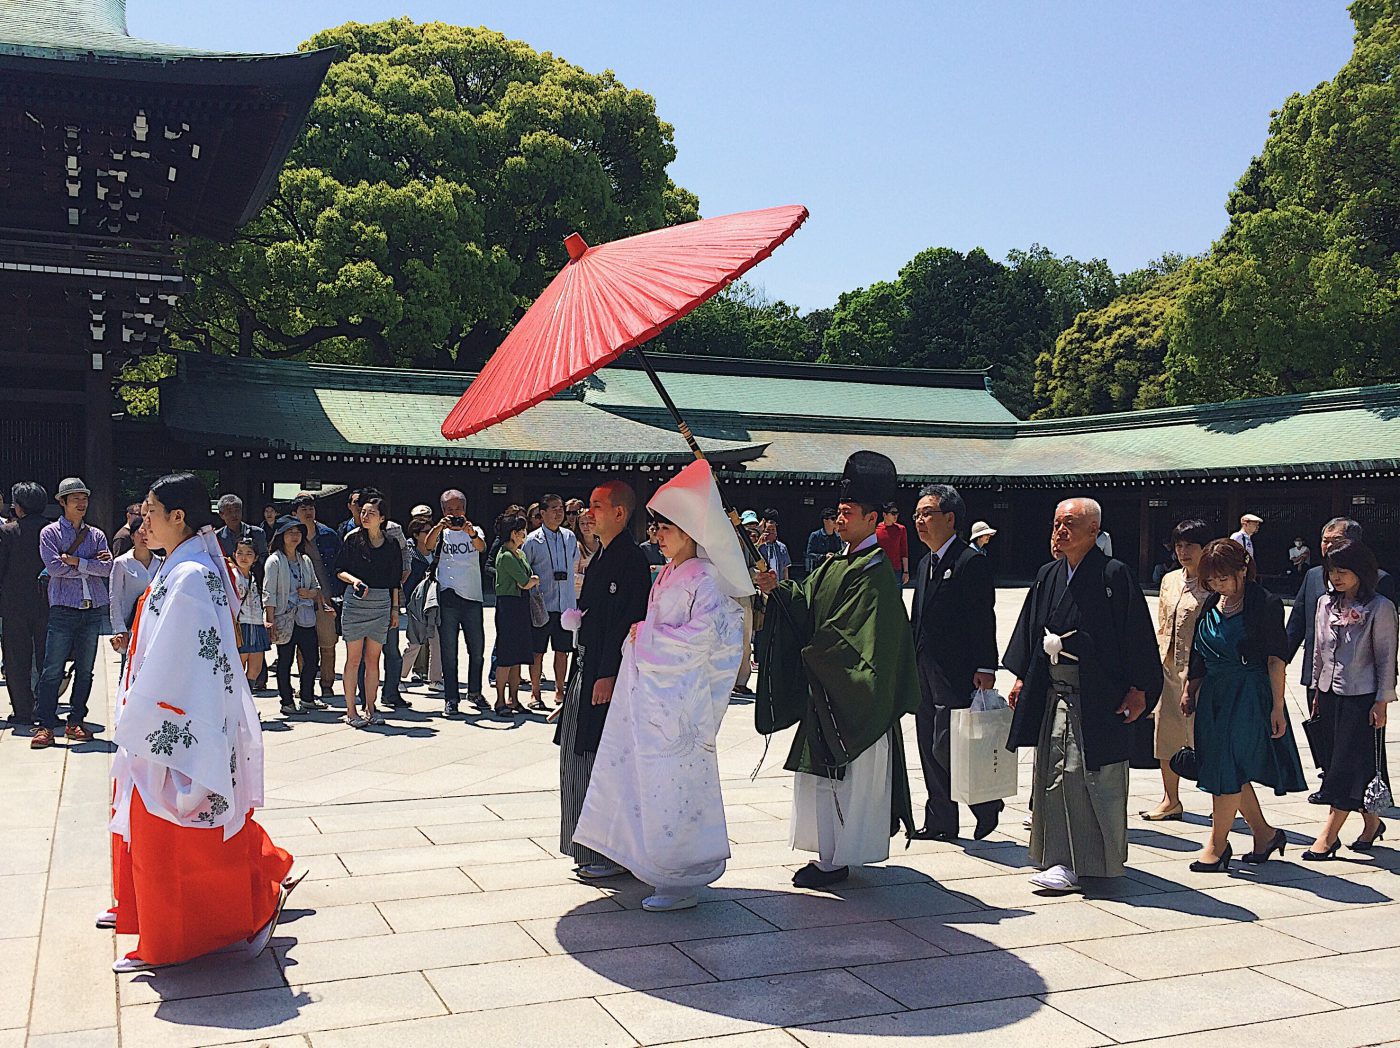 A Shinto wedding at Meiji Jingu